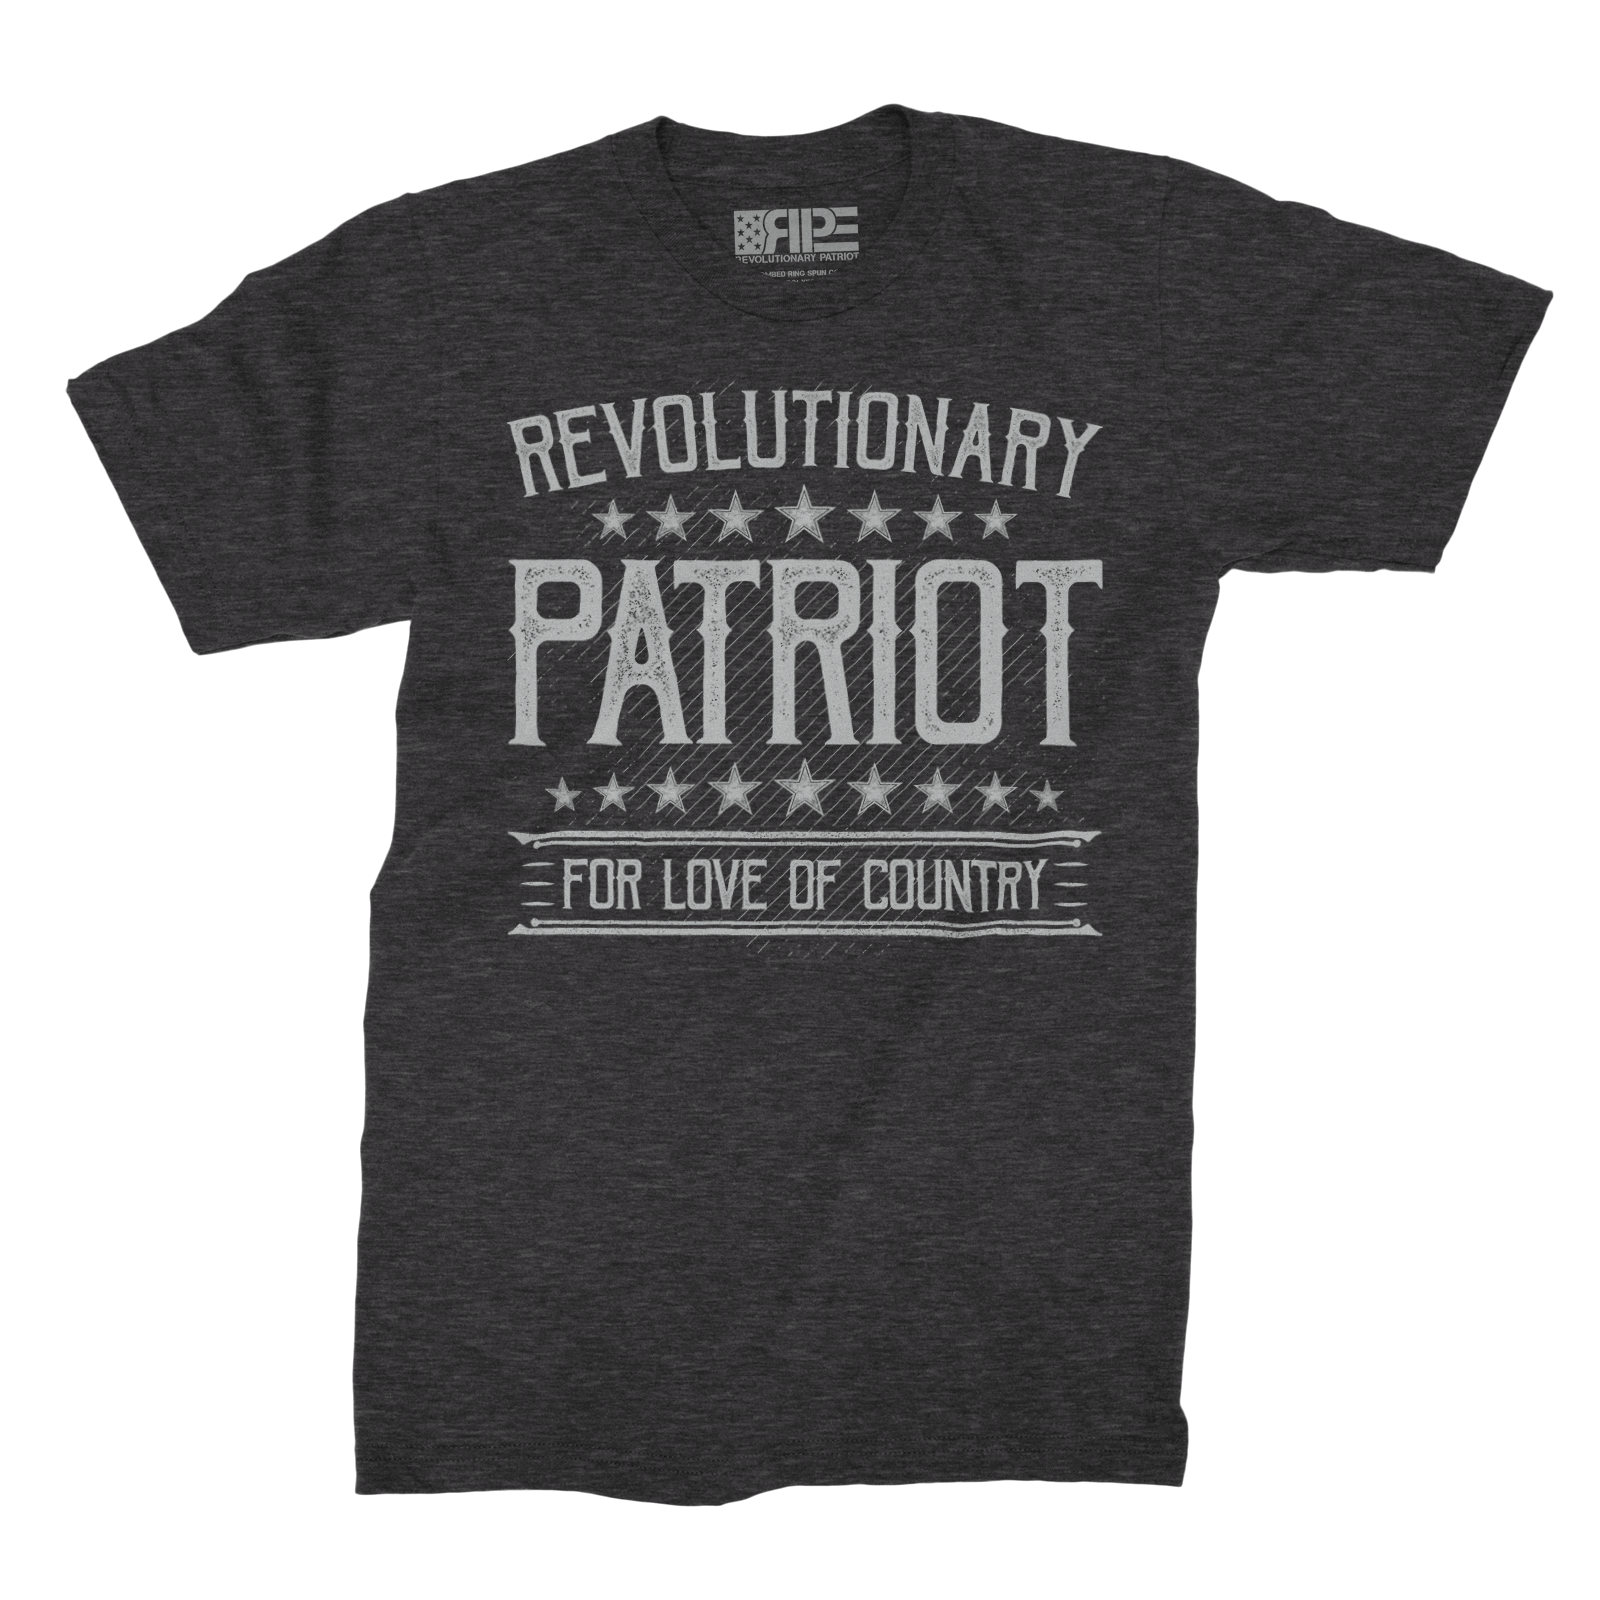 For Love of Country (Dark Grey Heather) - Revolutionary Patriot